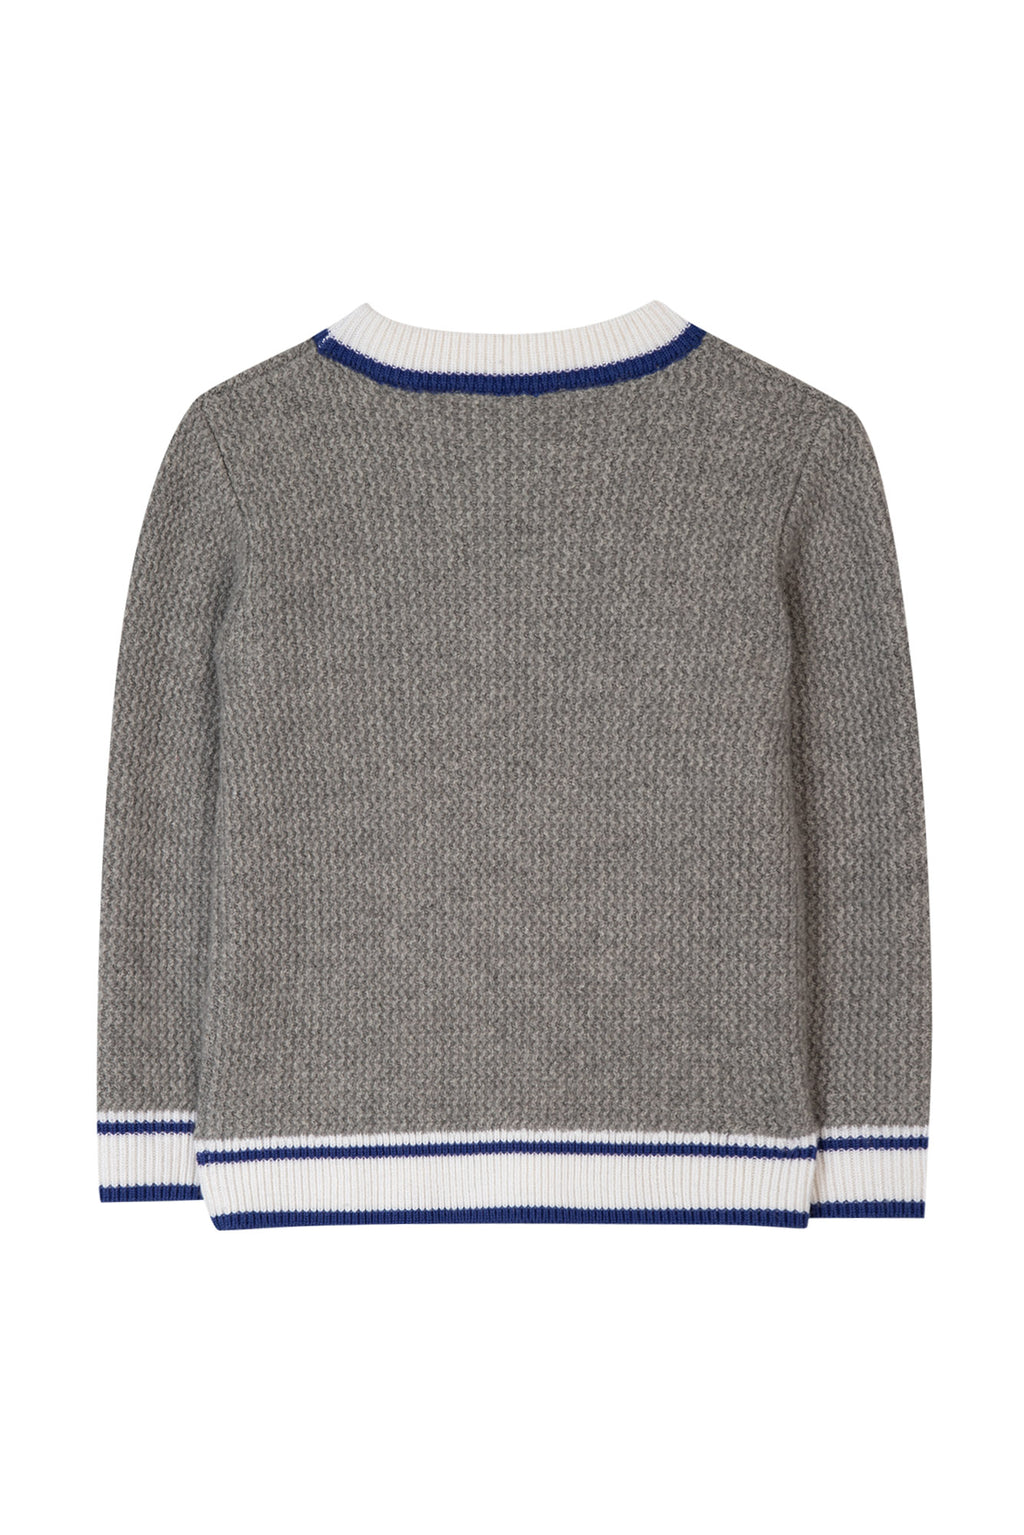 Sweater - Grey knitting Round neck